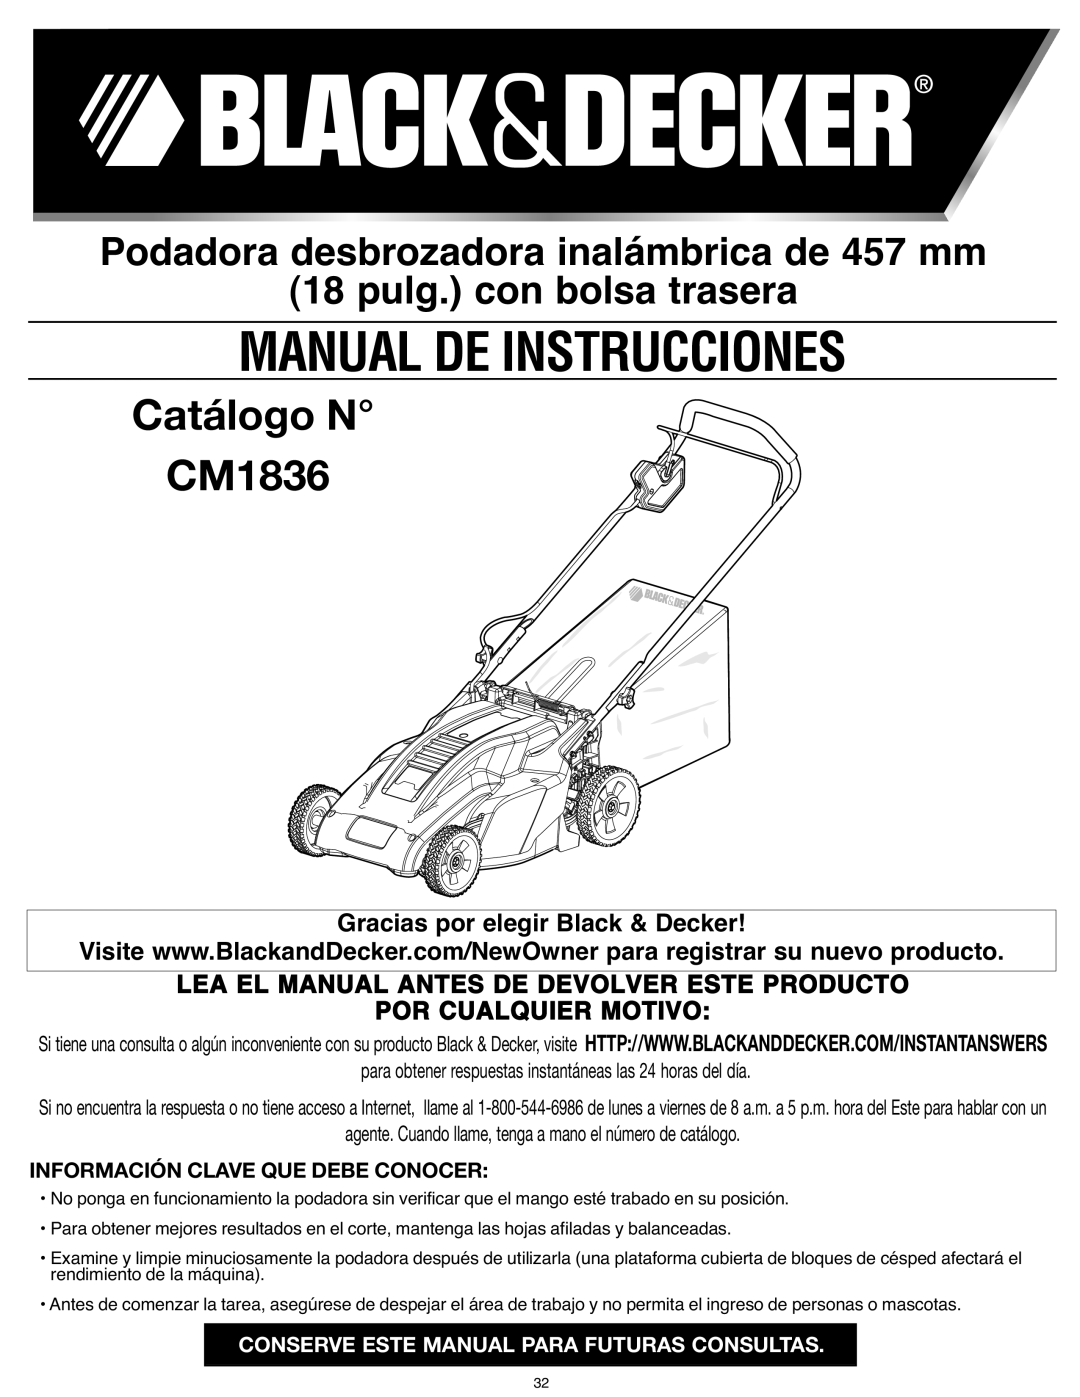 Black & Decker CM 1836, CM1836R Manual De Instrucciones, Catálogo N CM1836, Podadora desbrozadora inalámbrica de 457 mm 